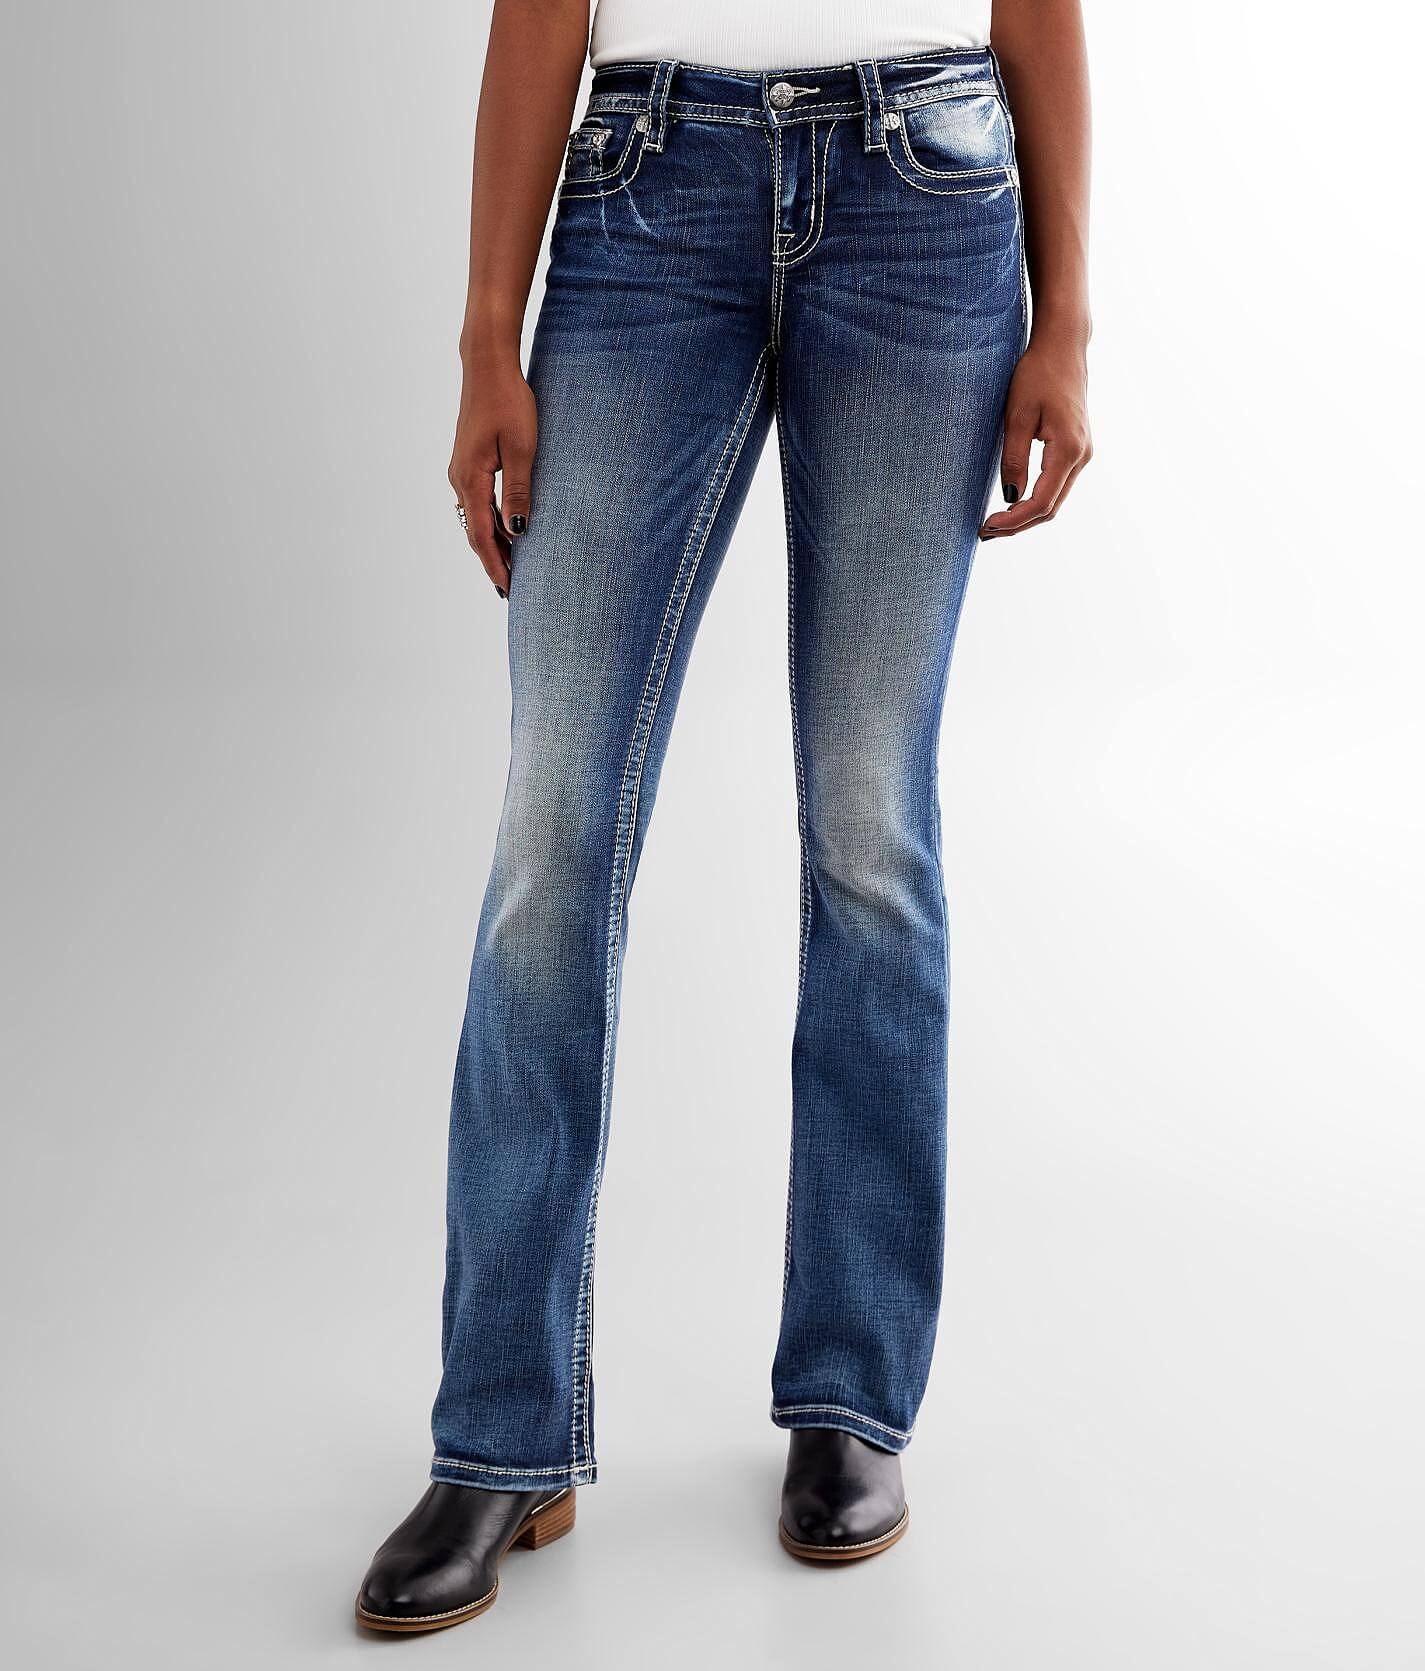 women's gray skinny jeans